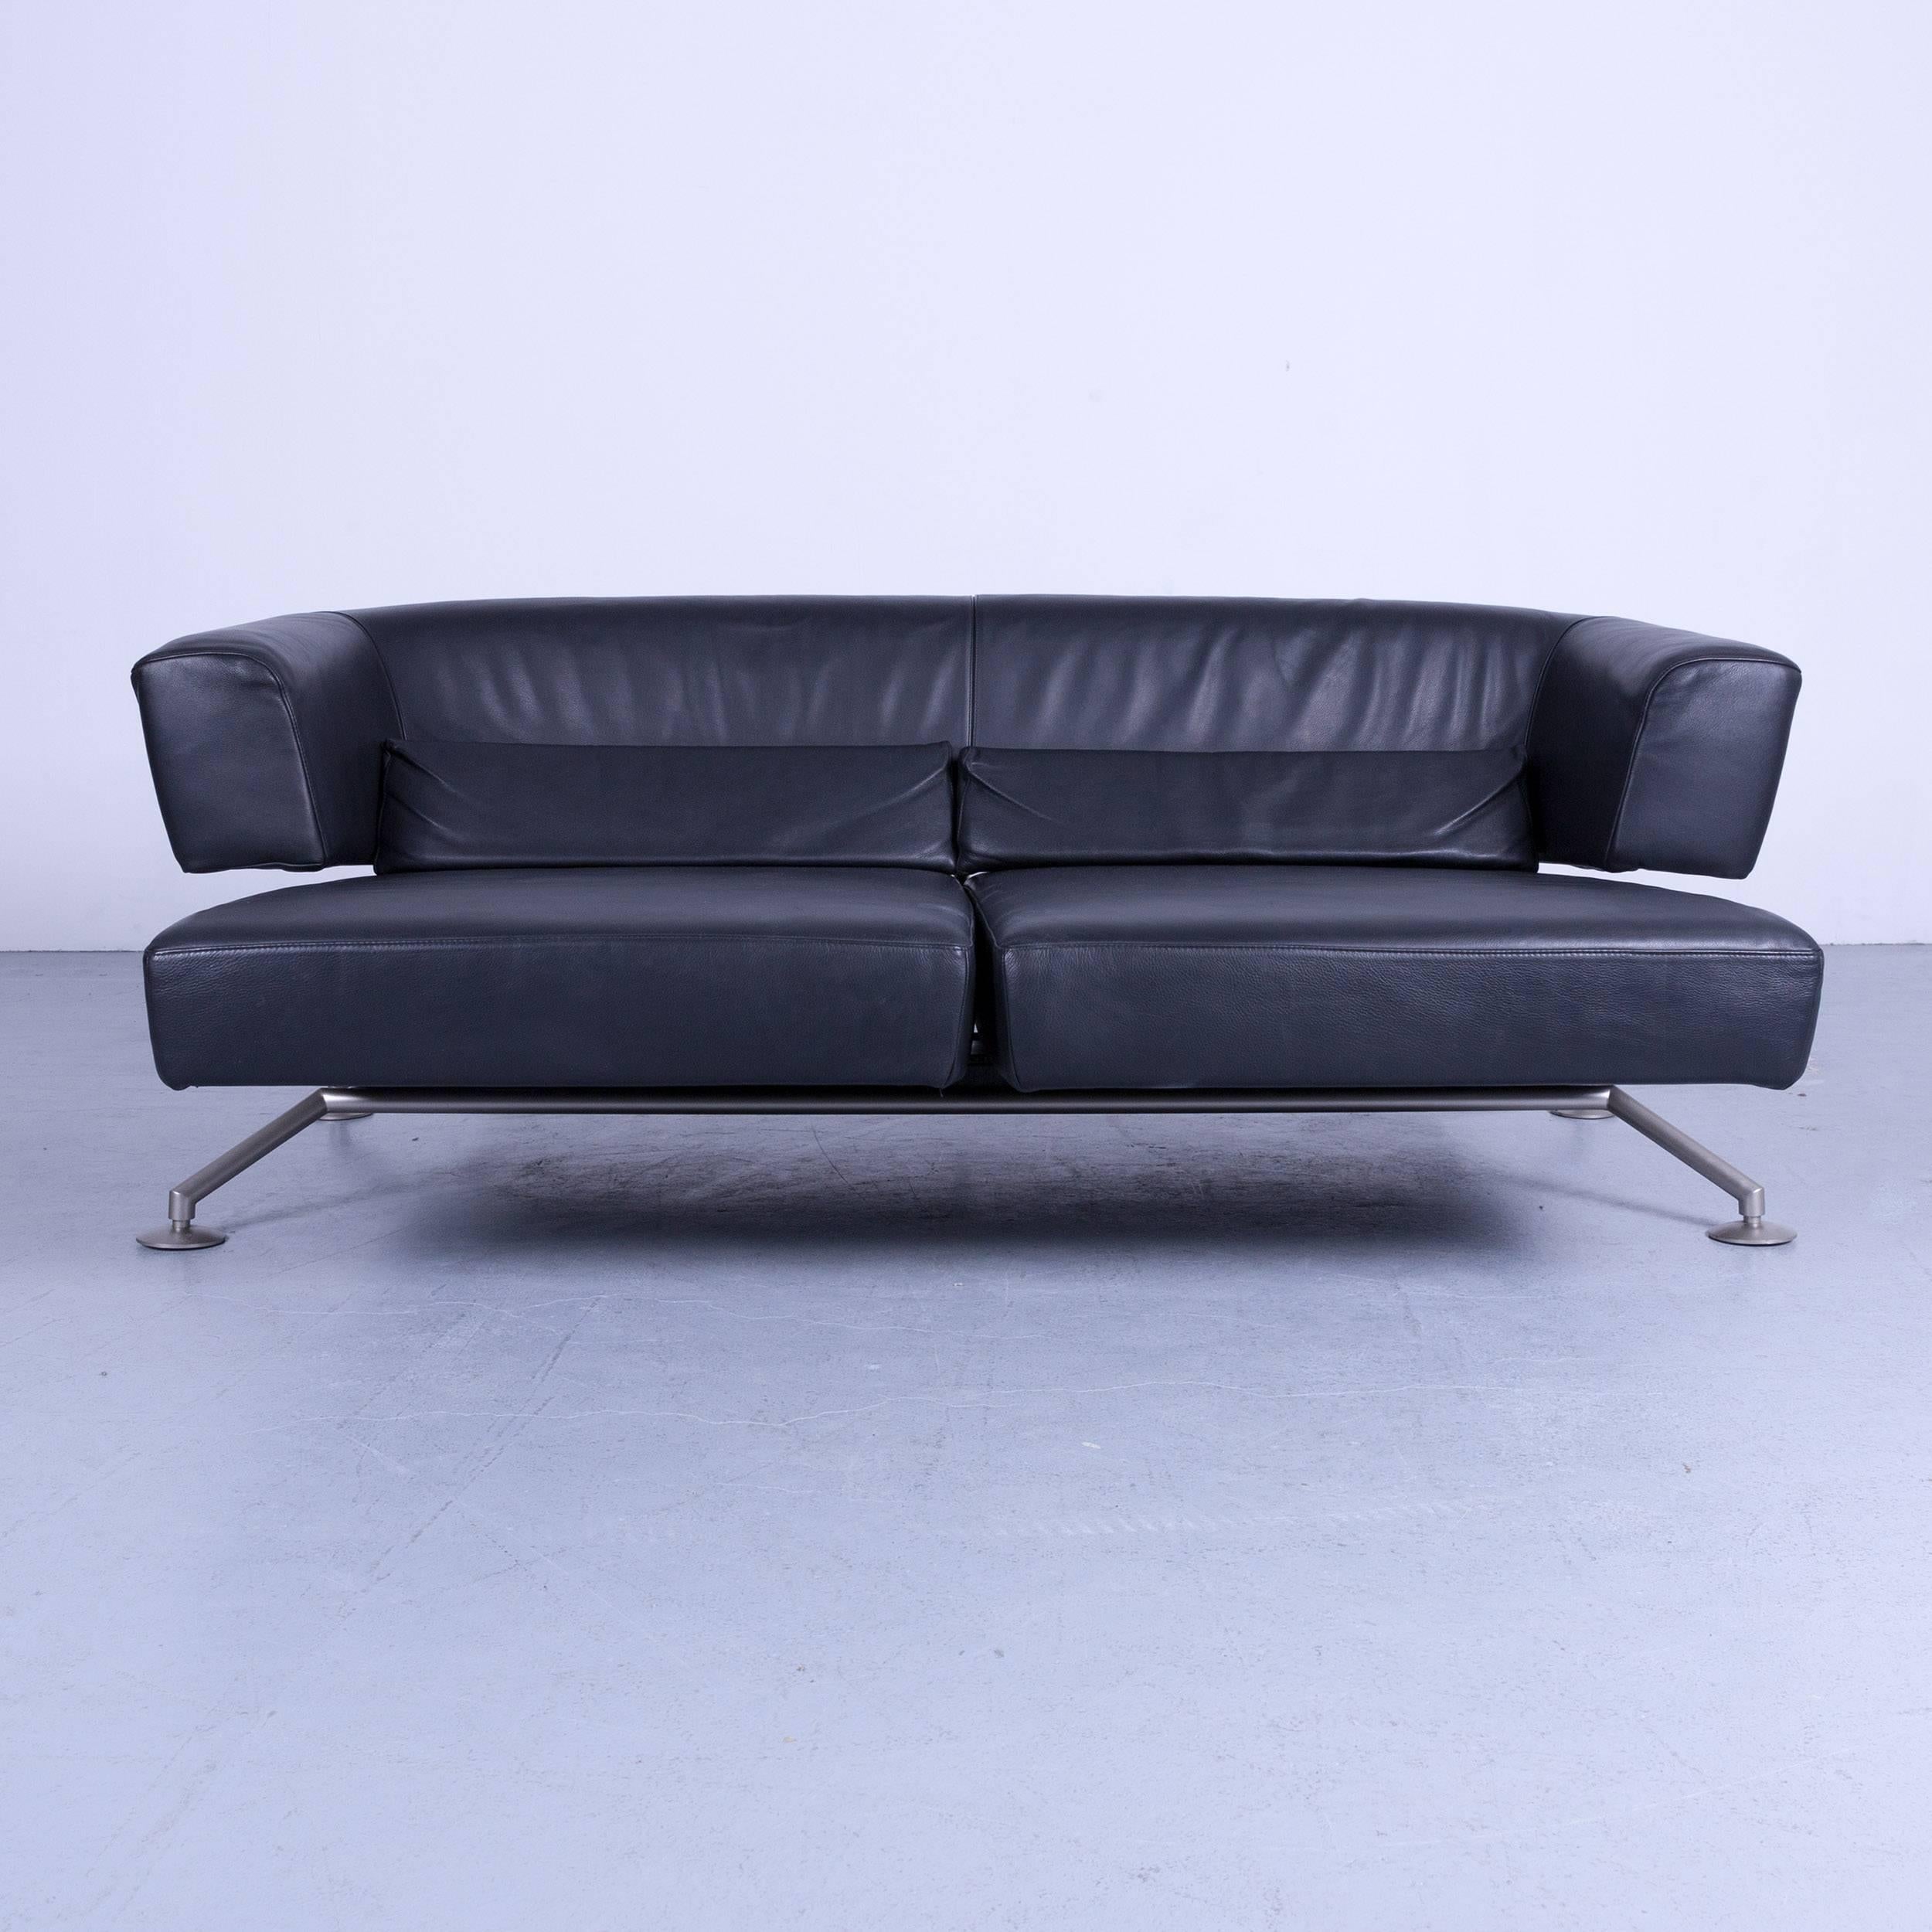 Black colored original COR Circum designer leather sofa in a minimalistic and modern design, made for pure comfort and flexibility.